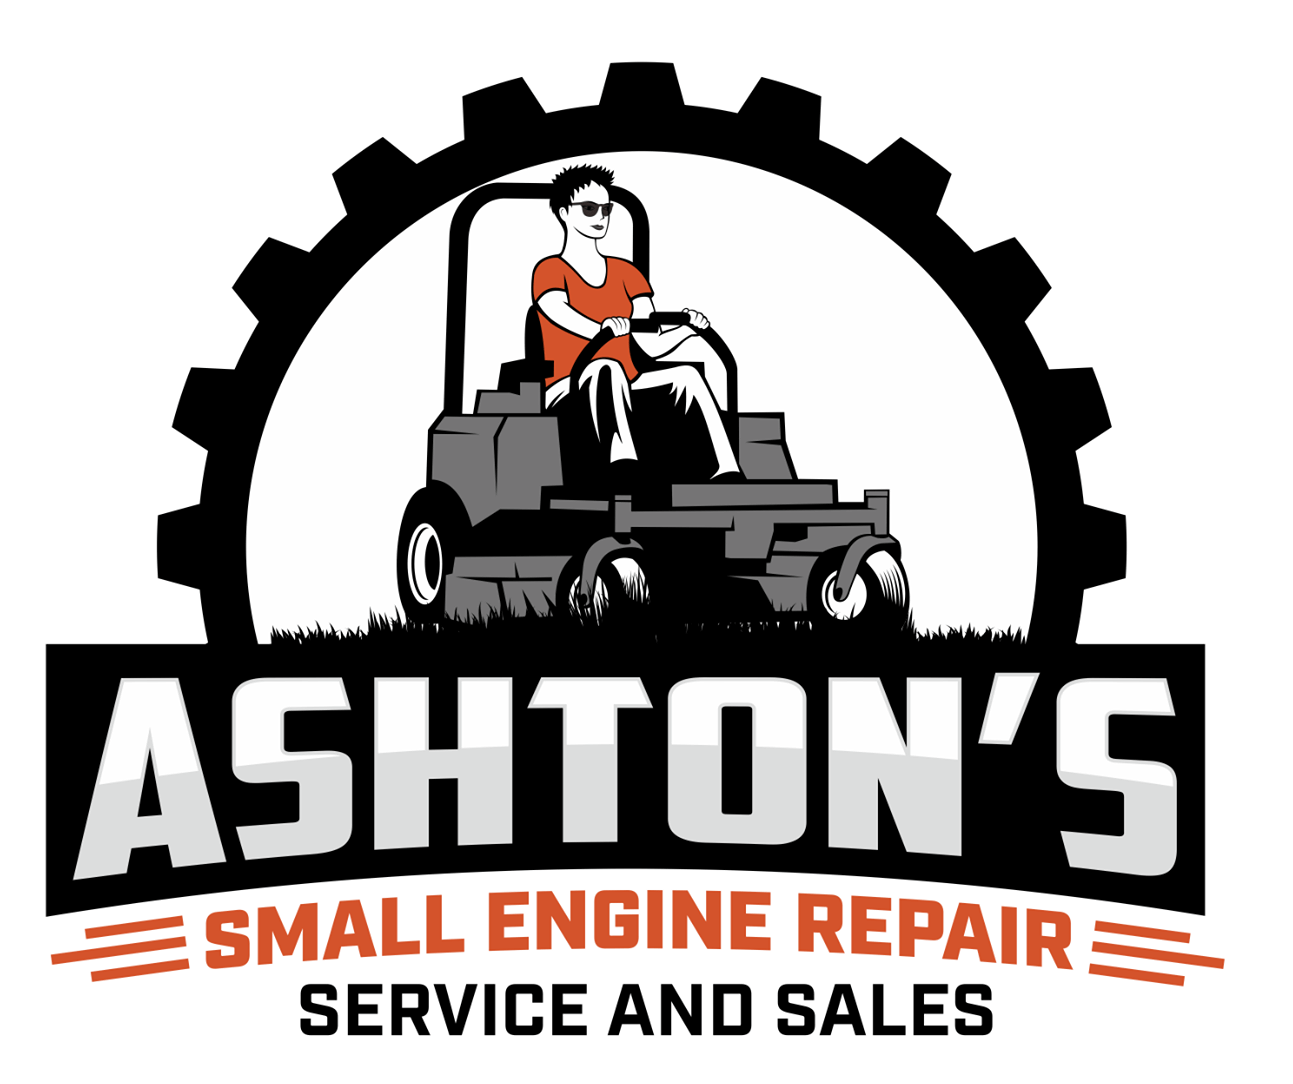 ashtons_small_engine_repair_logo